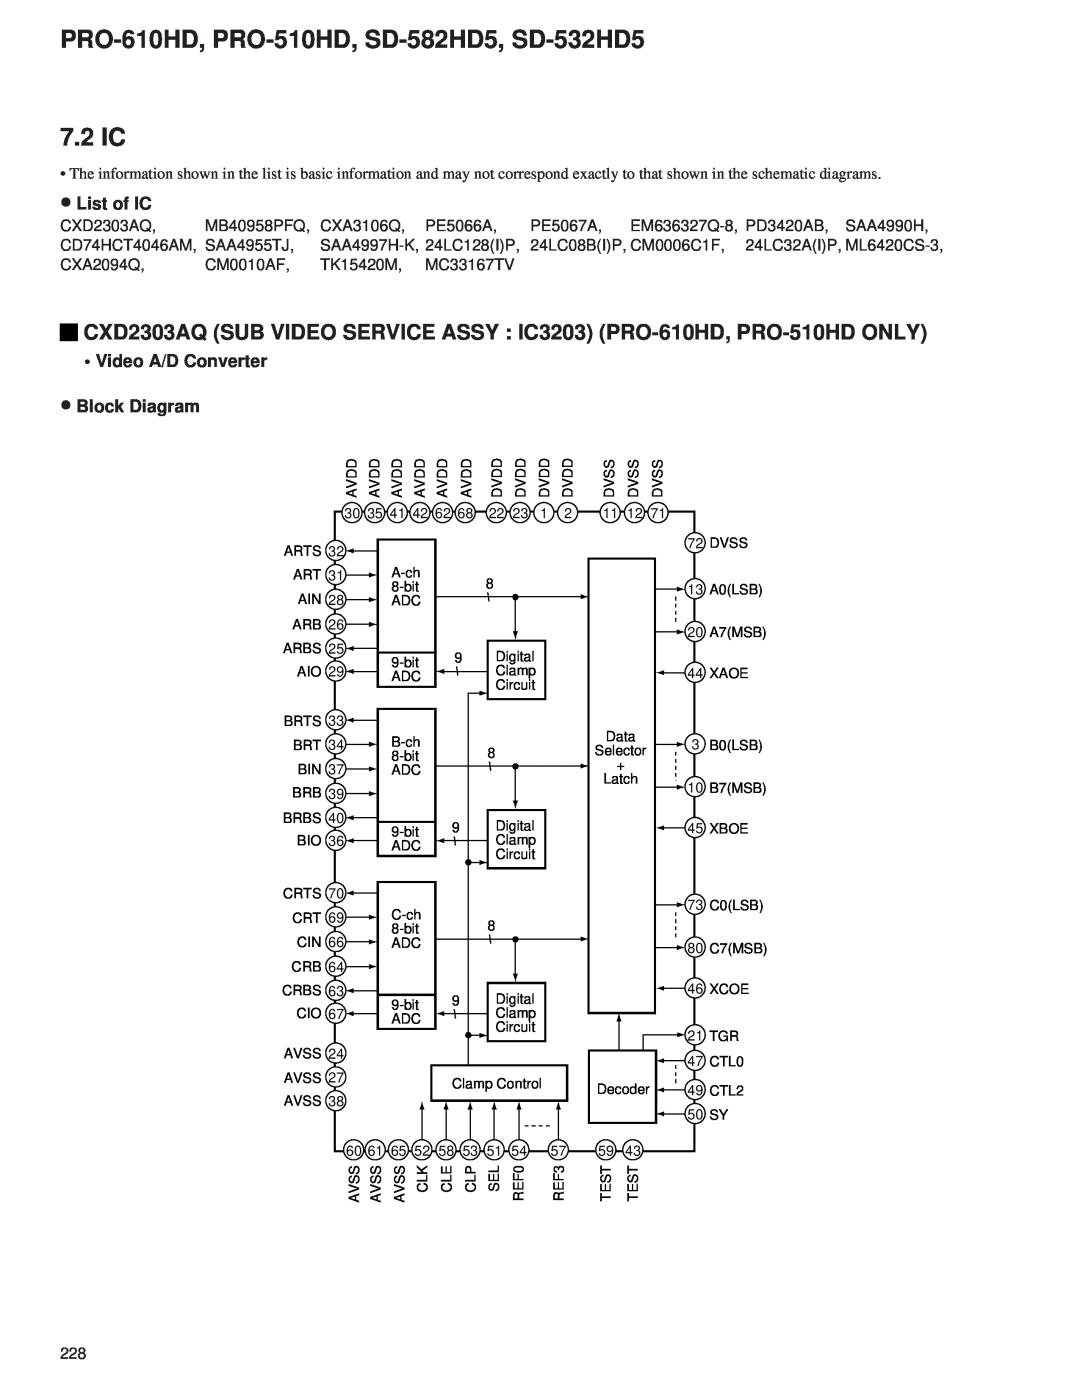 Pioneer PRO-610HD, PRO-510HD, SD-582HD5, SD-532HD5 7.2 IC, ∙ List of IC, Video A/D Converter ∙ Block Diagram 